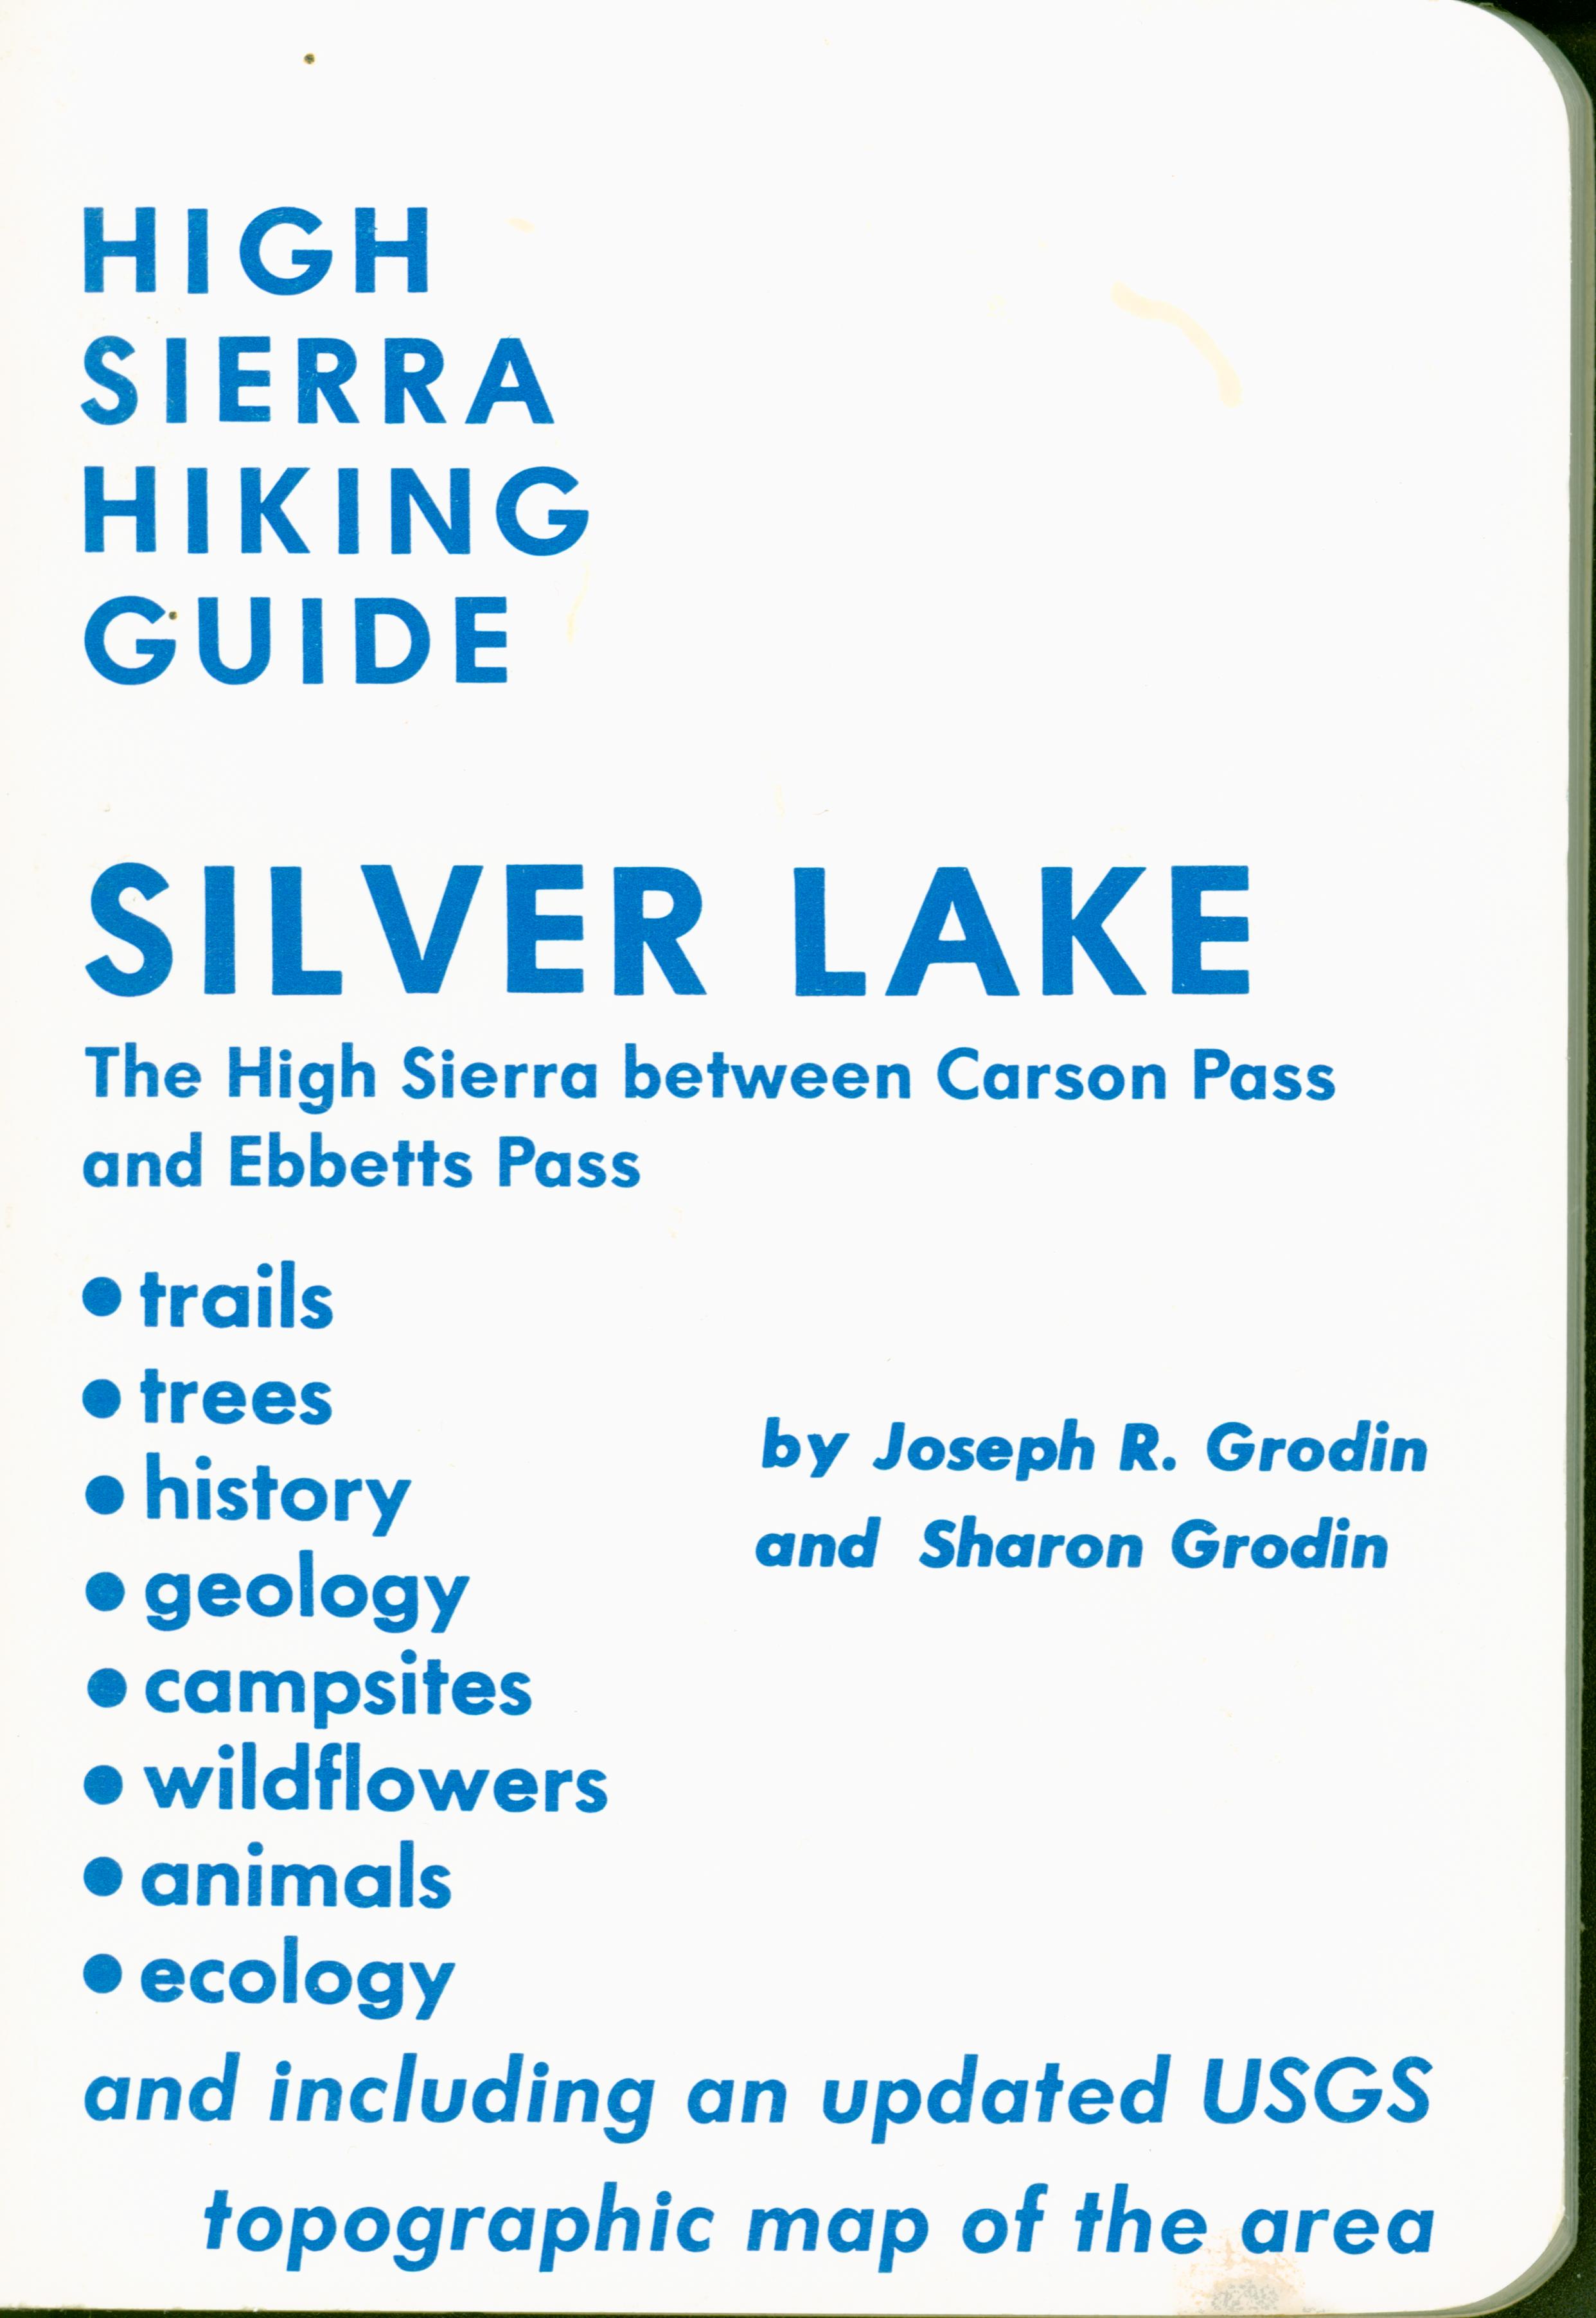 SILVER LAKE: High Sierra Hiking Guide #17; the High Sierra between Carson Pass and Ebbetts Pass (CA). 